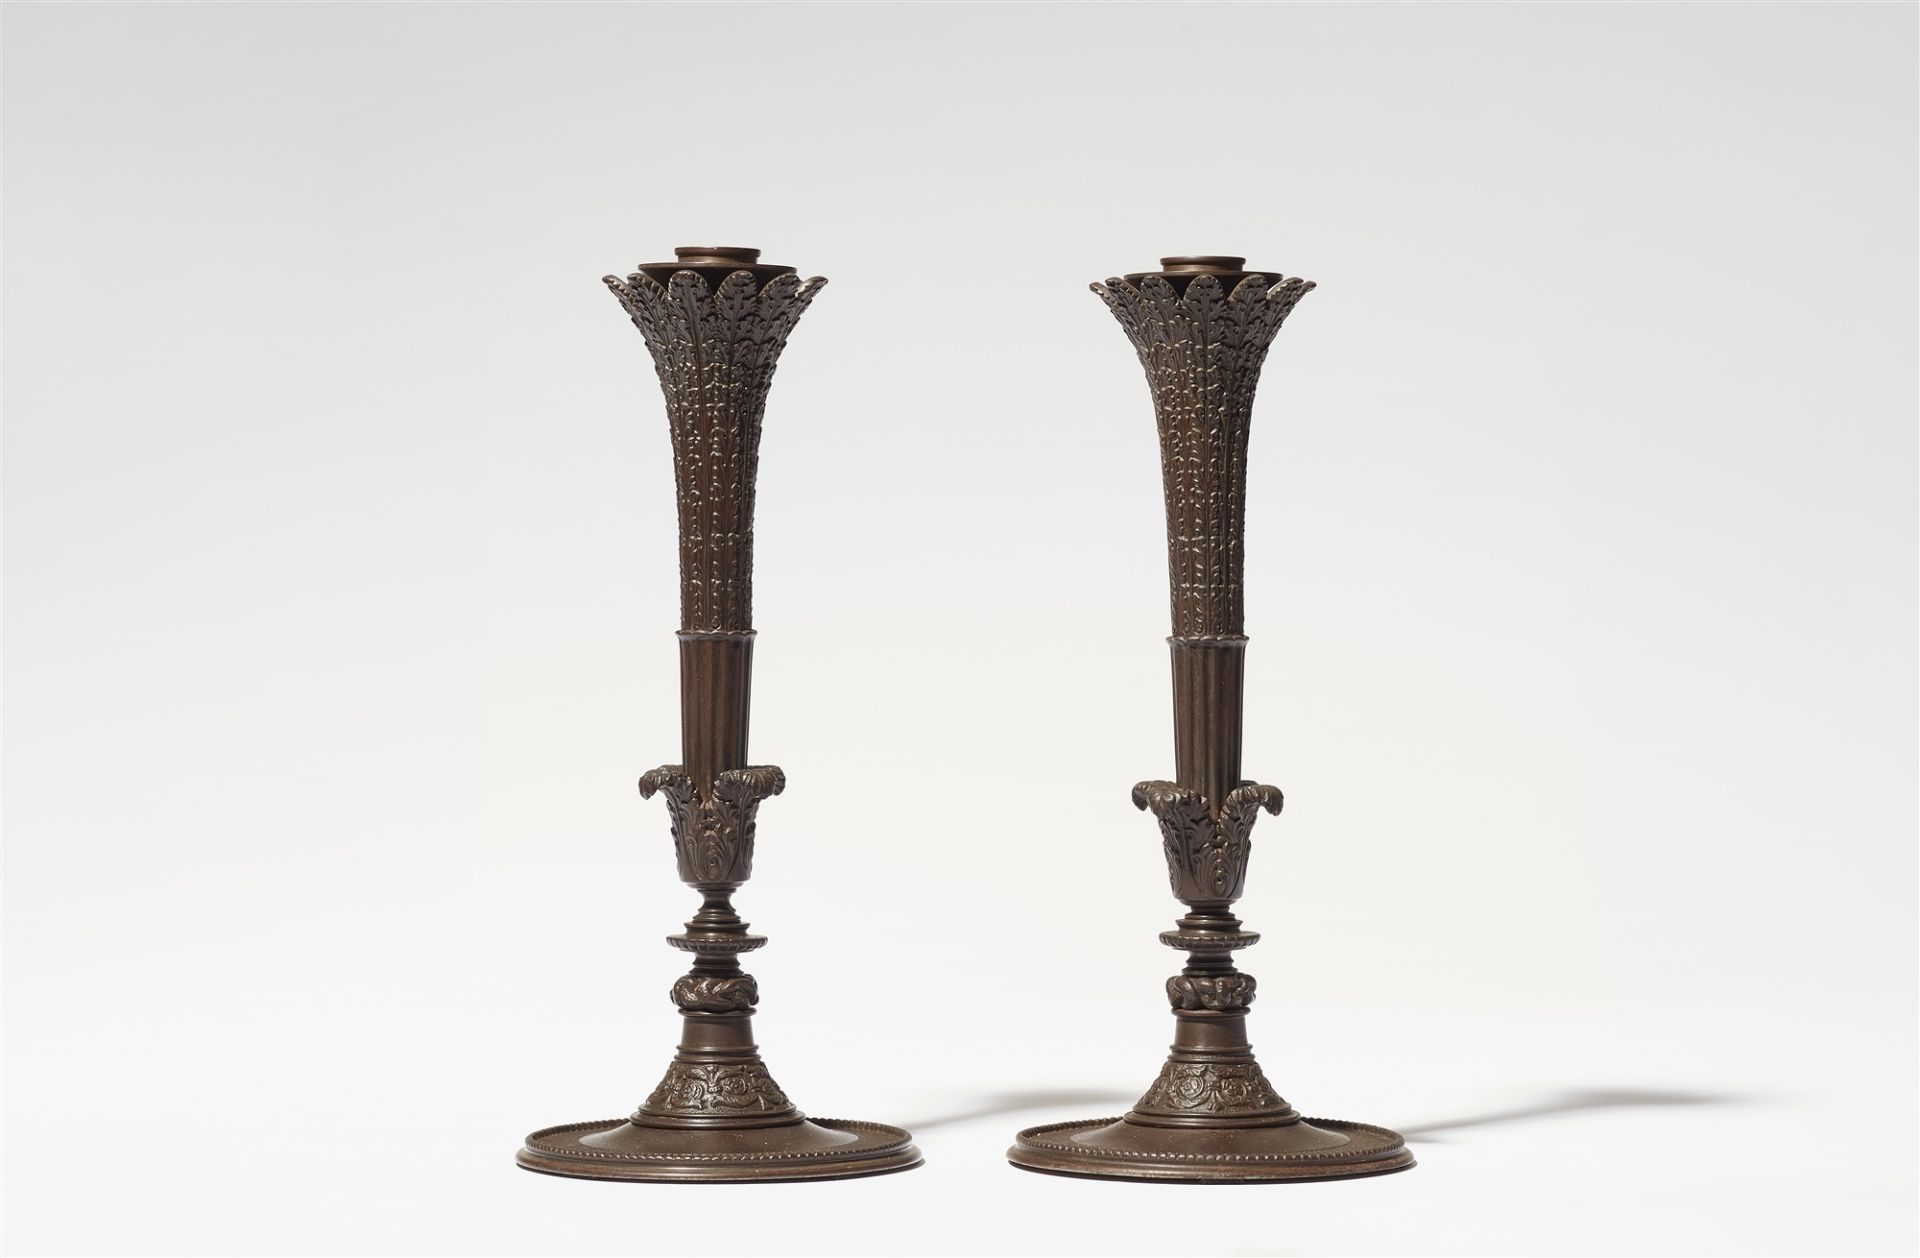 A pair of cast iron candelabra after a design by Karl Friedrich Schinkel